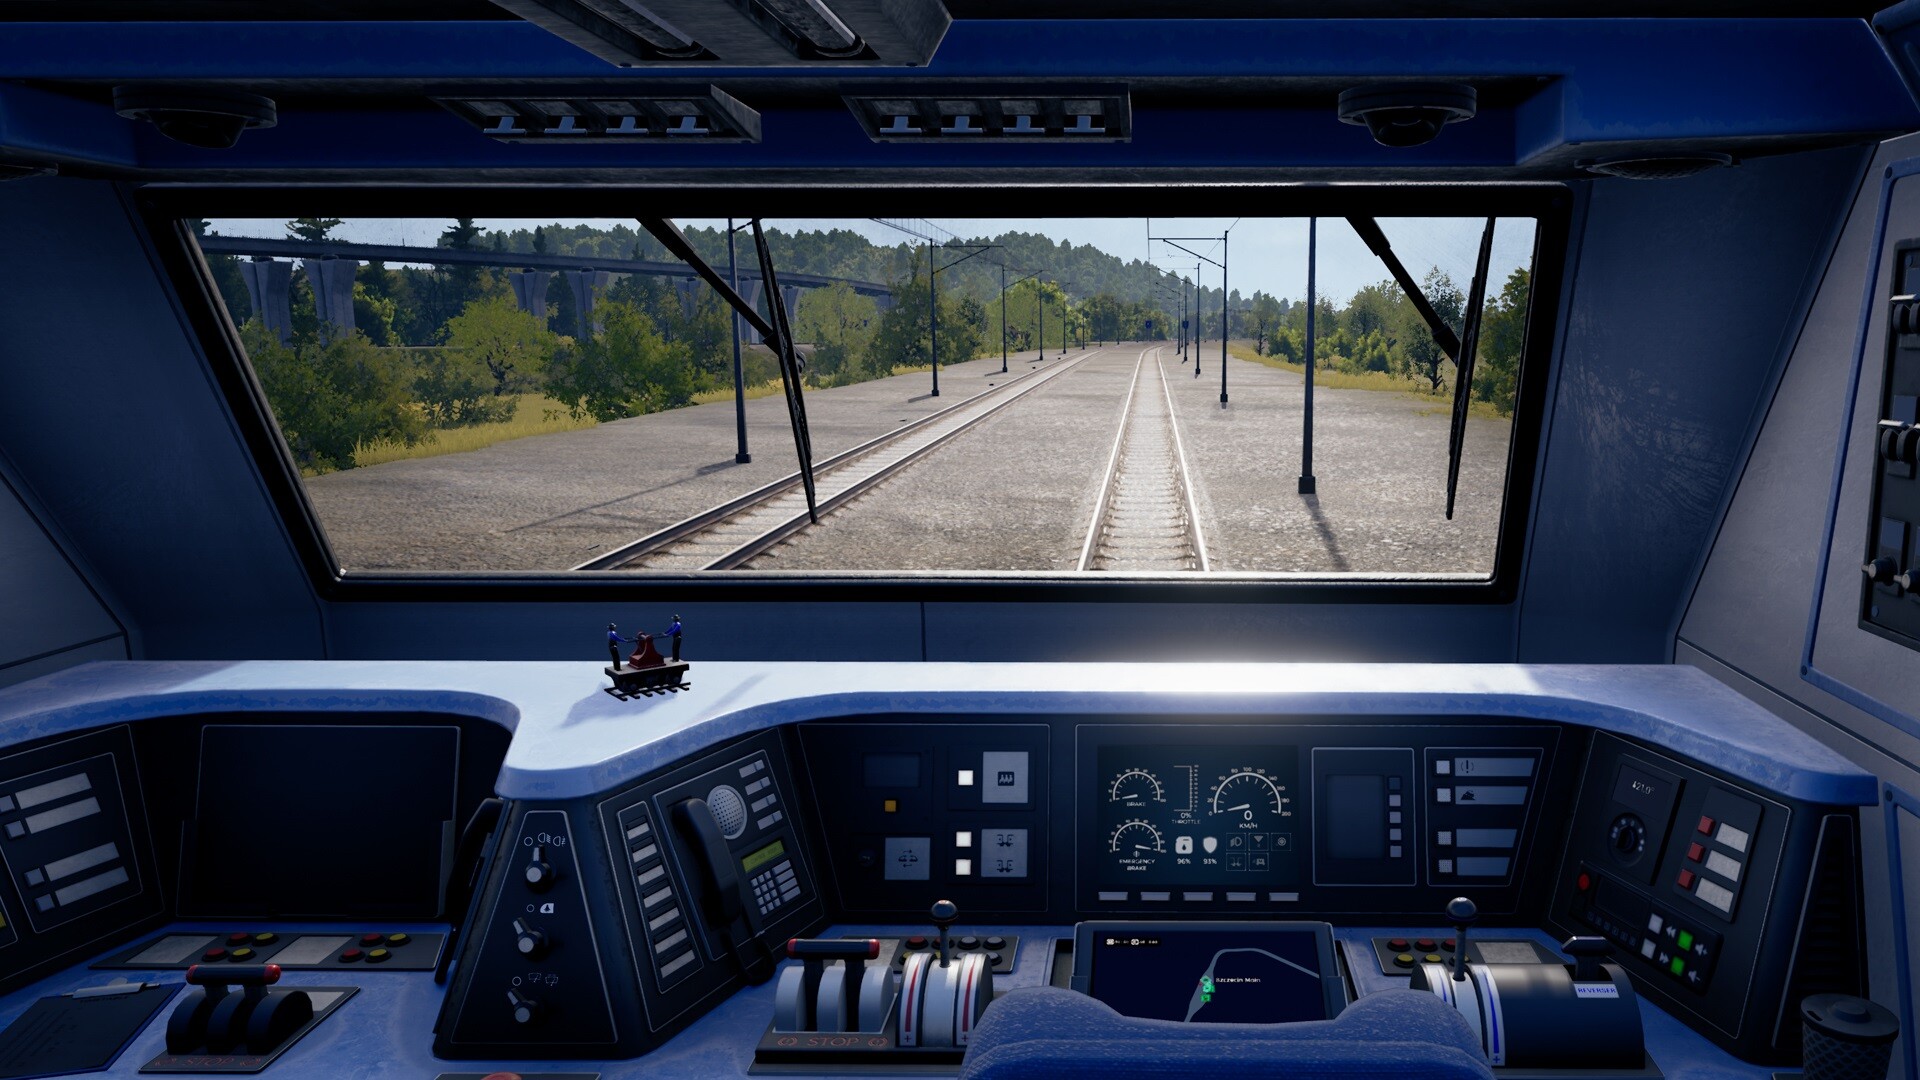 [$ 1.63] Train Life: A Railway Simulator - Supporter Pack DLC Steam CD Key